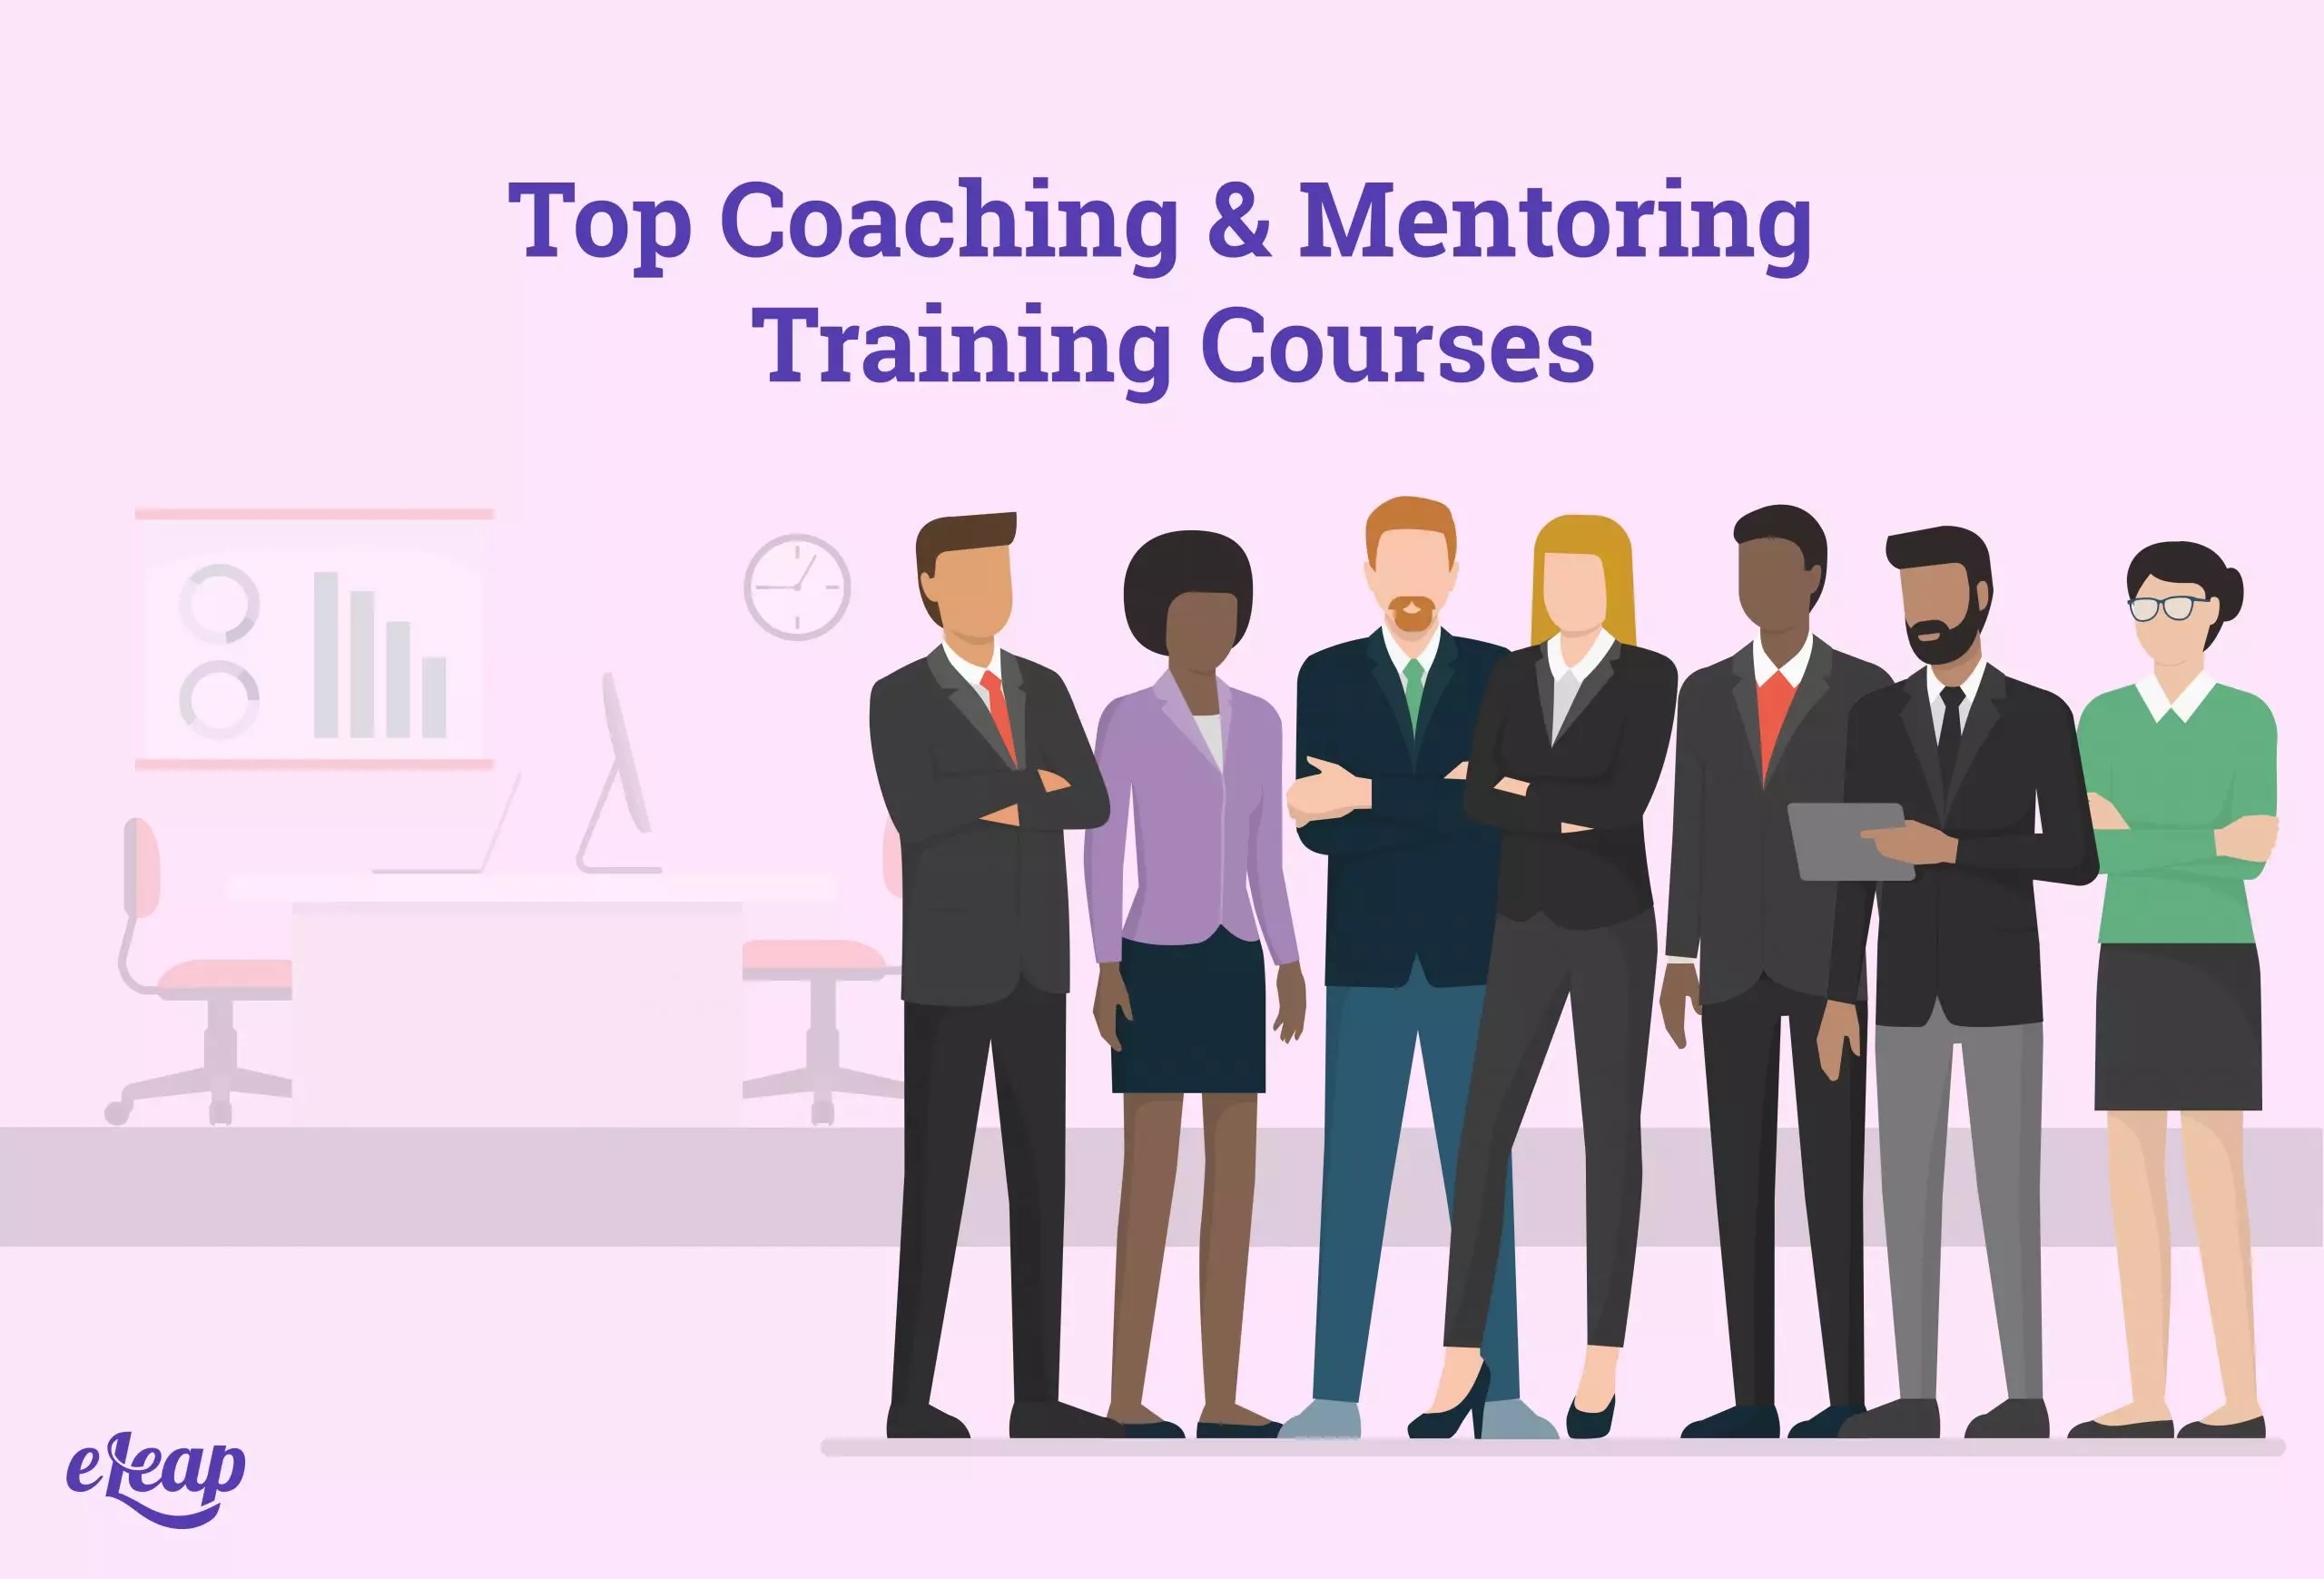 Top Coaching & Mentoring Training Courses